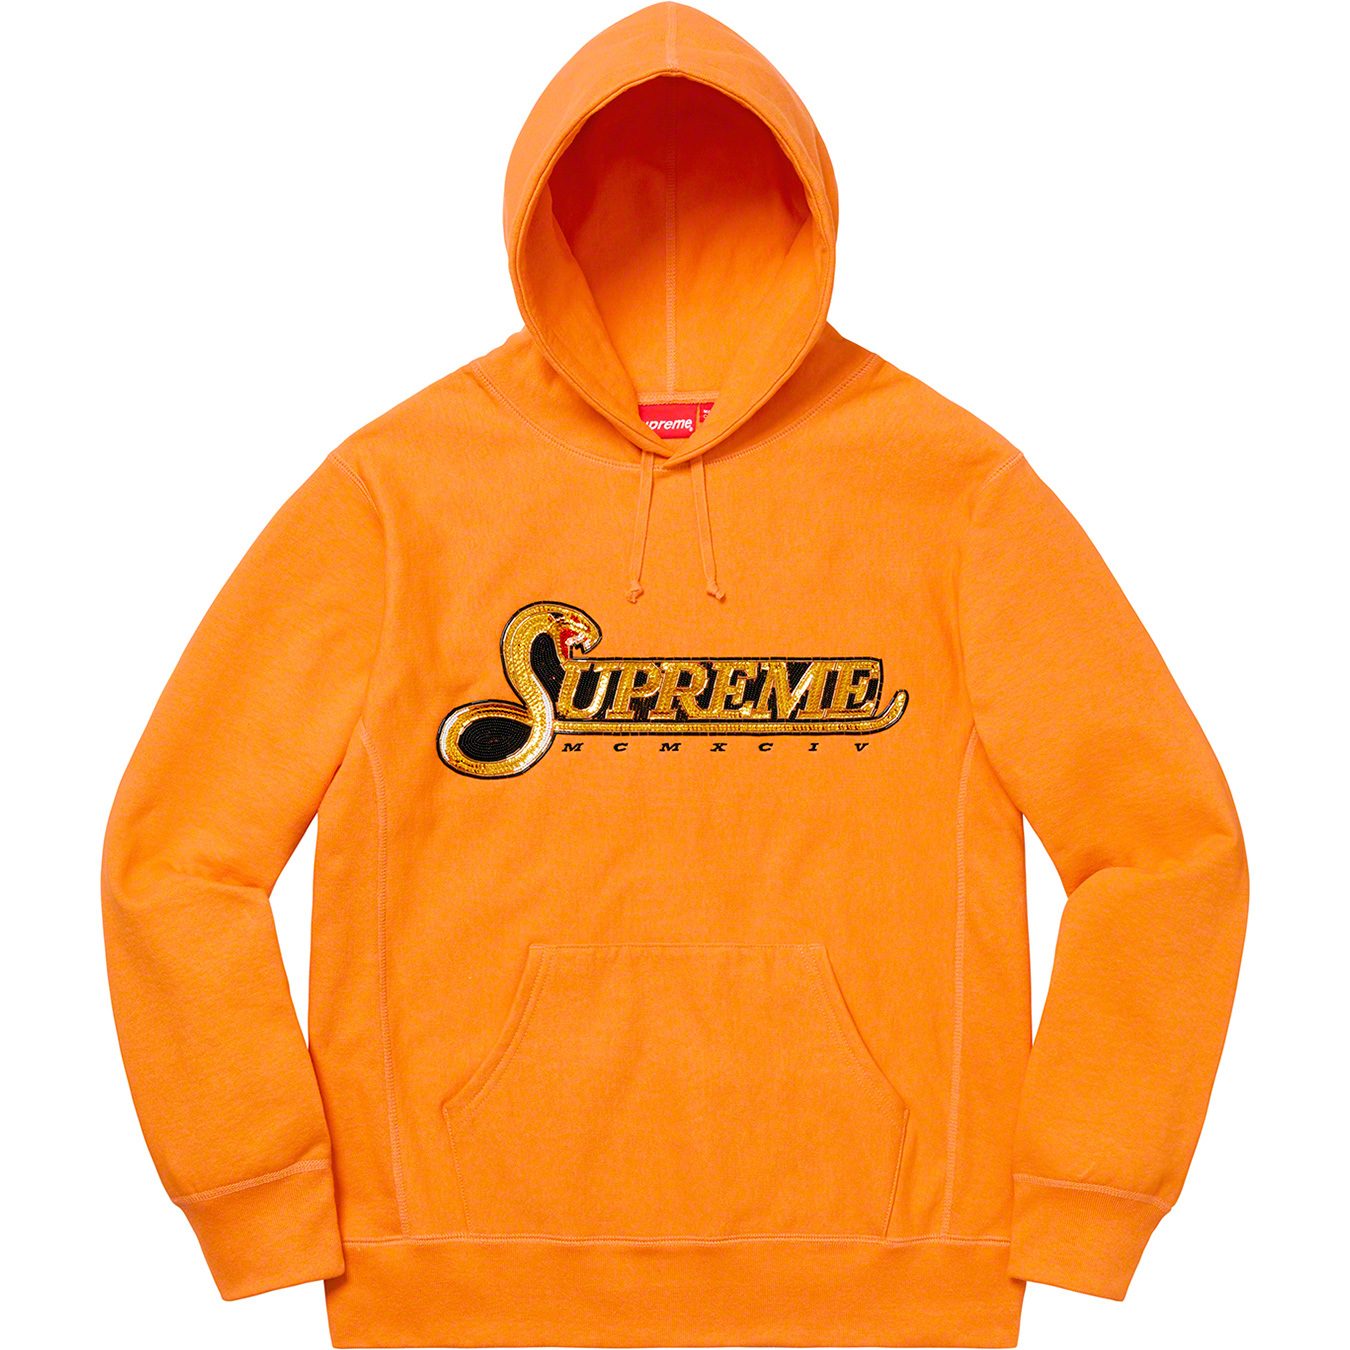 Sequin Viper Hooded Sweatshirt - fall winter 2019 - Supreme